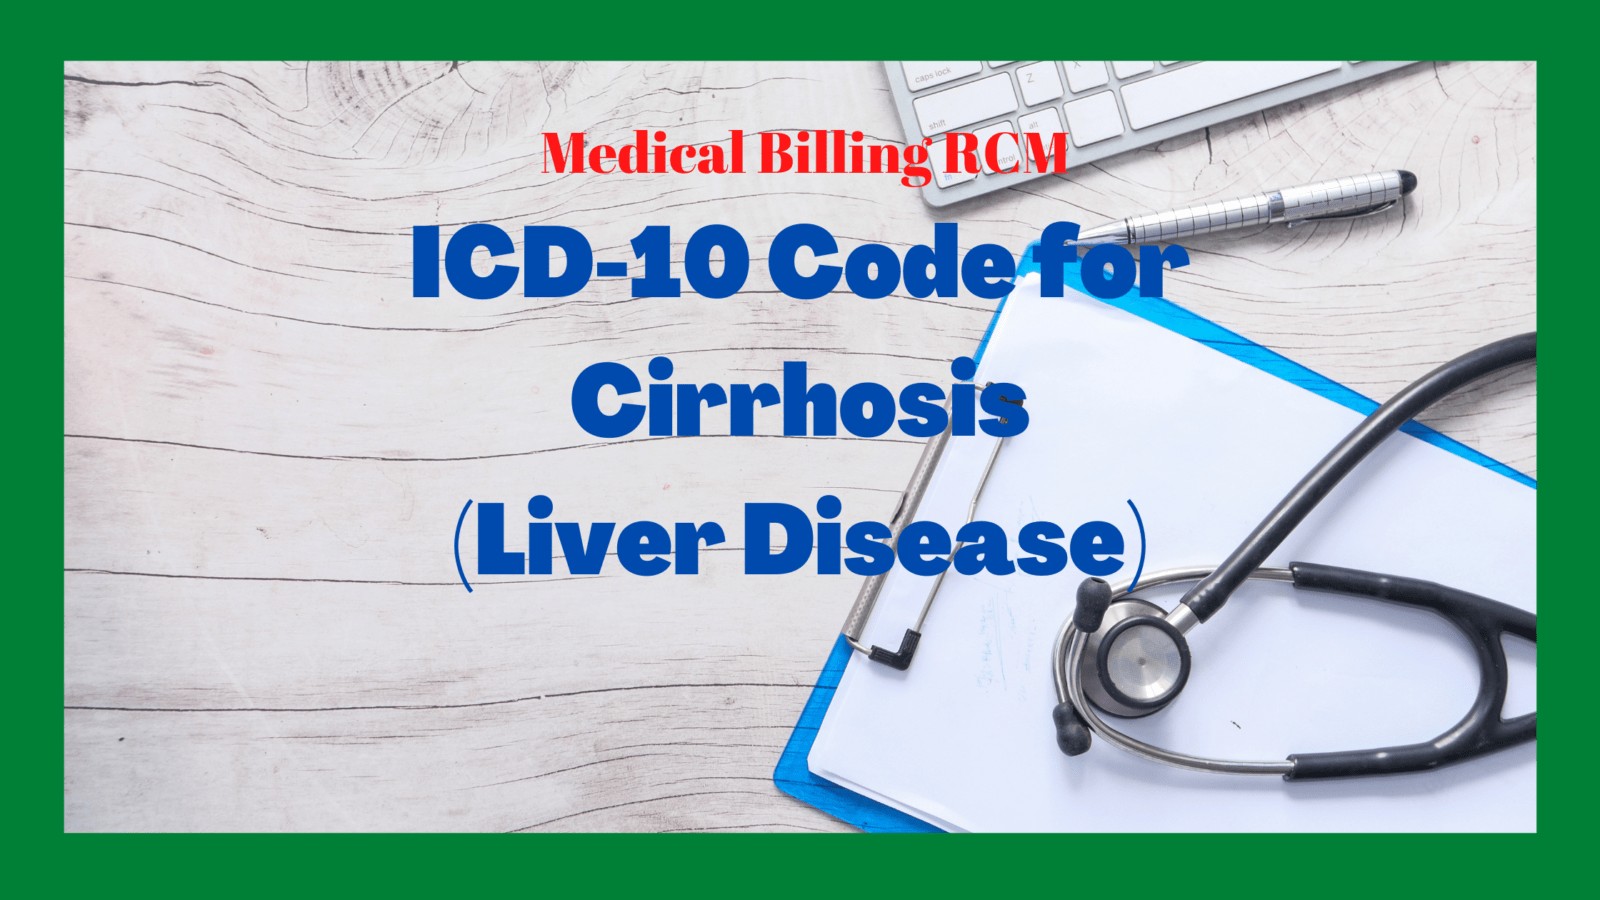 ICD-10 Code for Cirrhosis